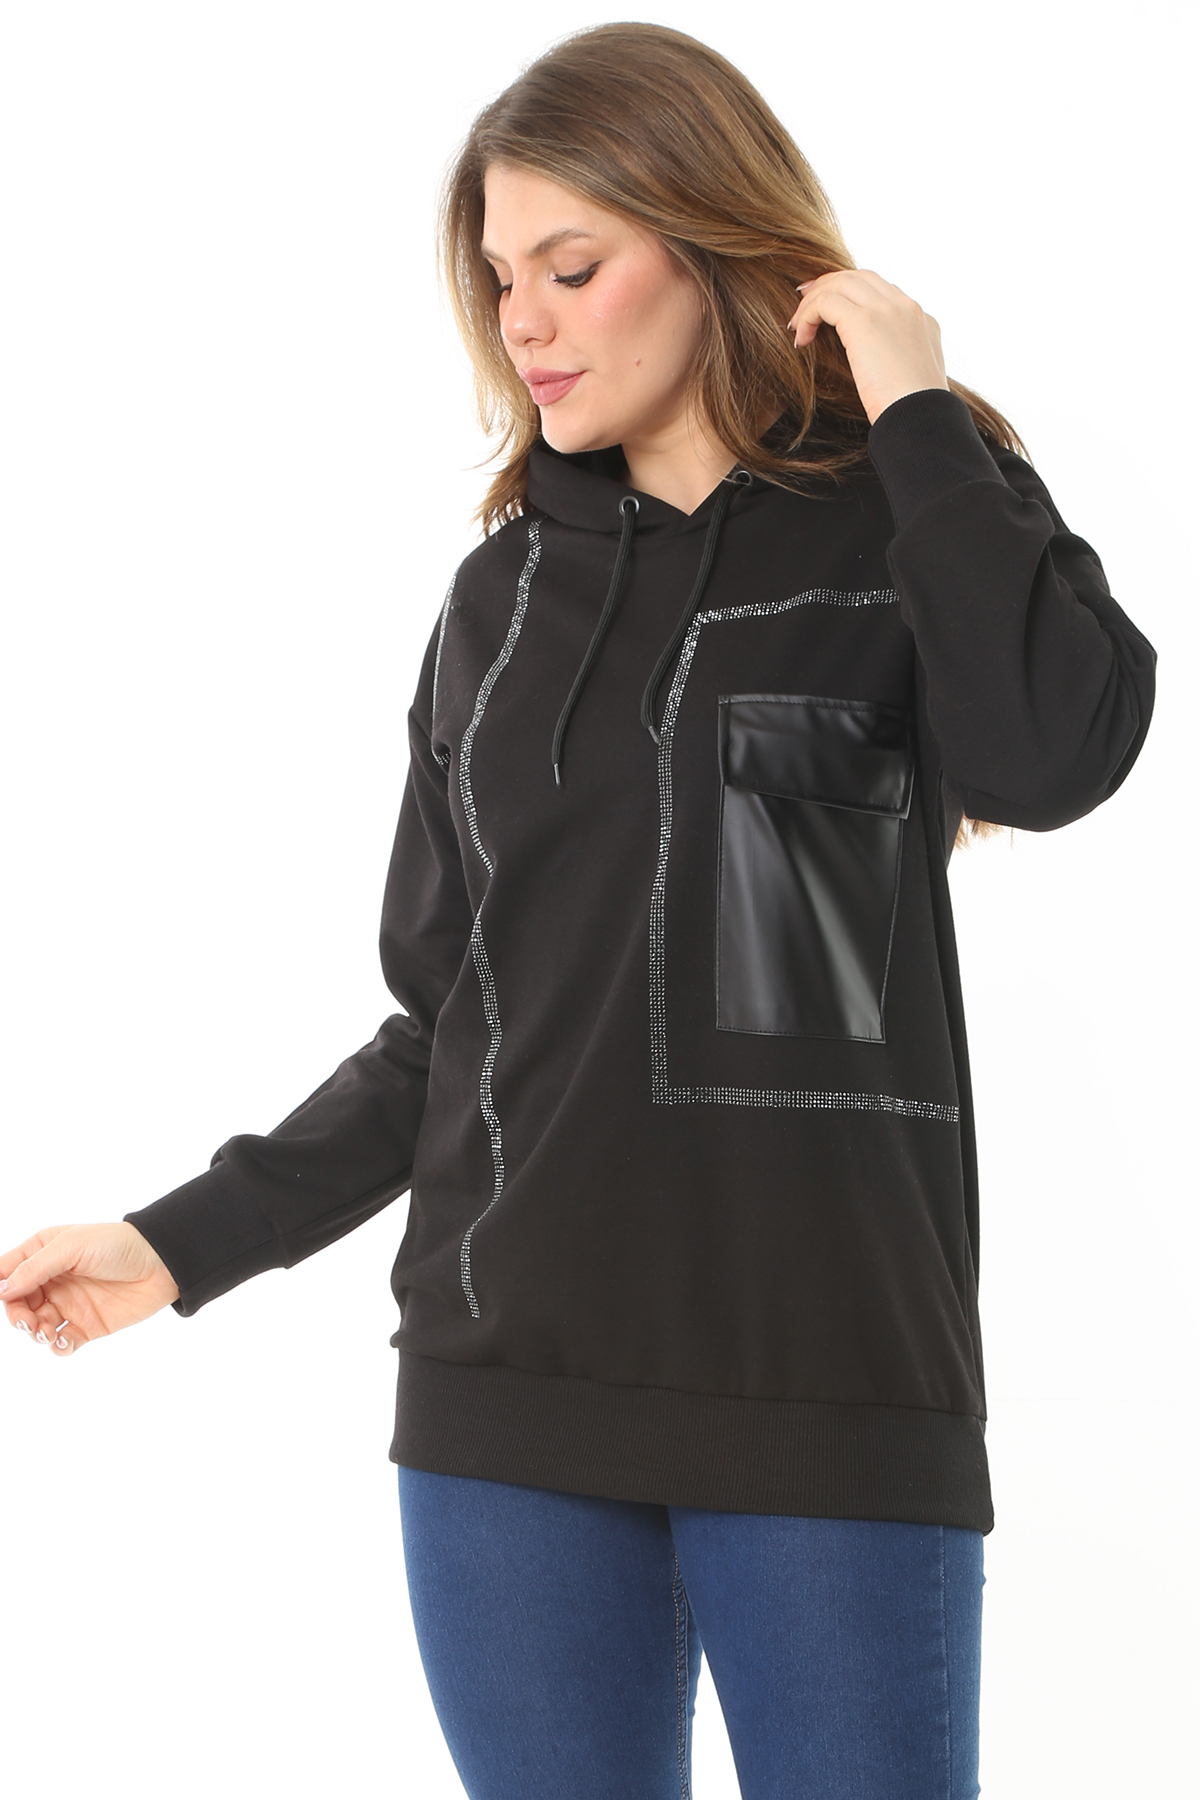 Şans Women's Plus Size Black Stones And Faux Leather Detailed Hooded Sweatshirt